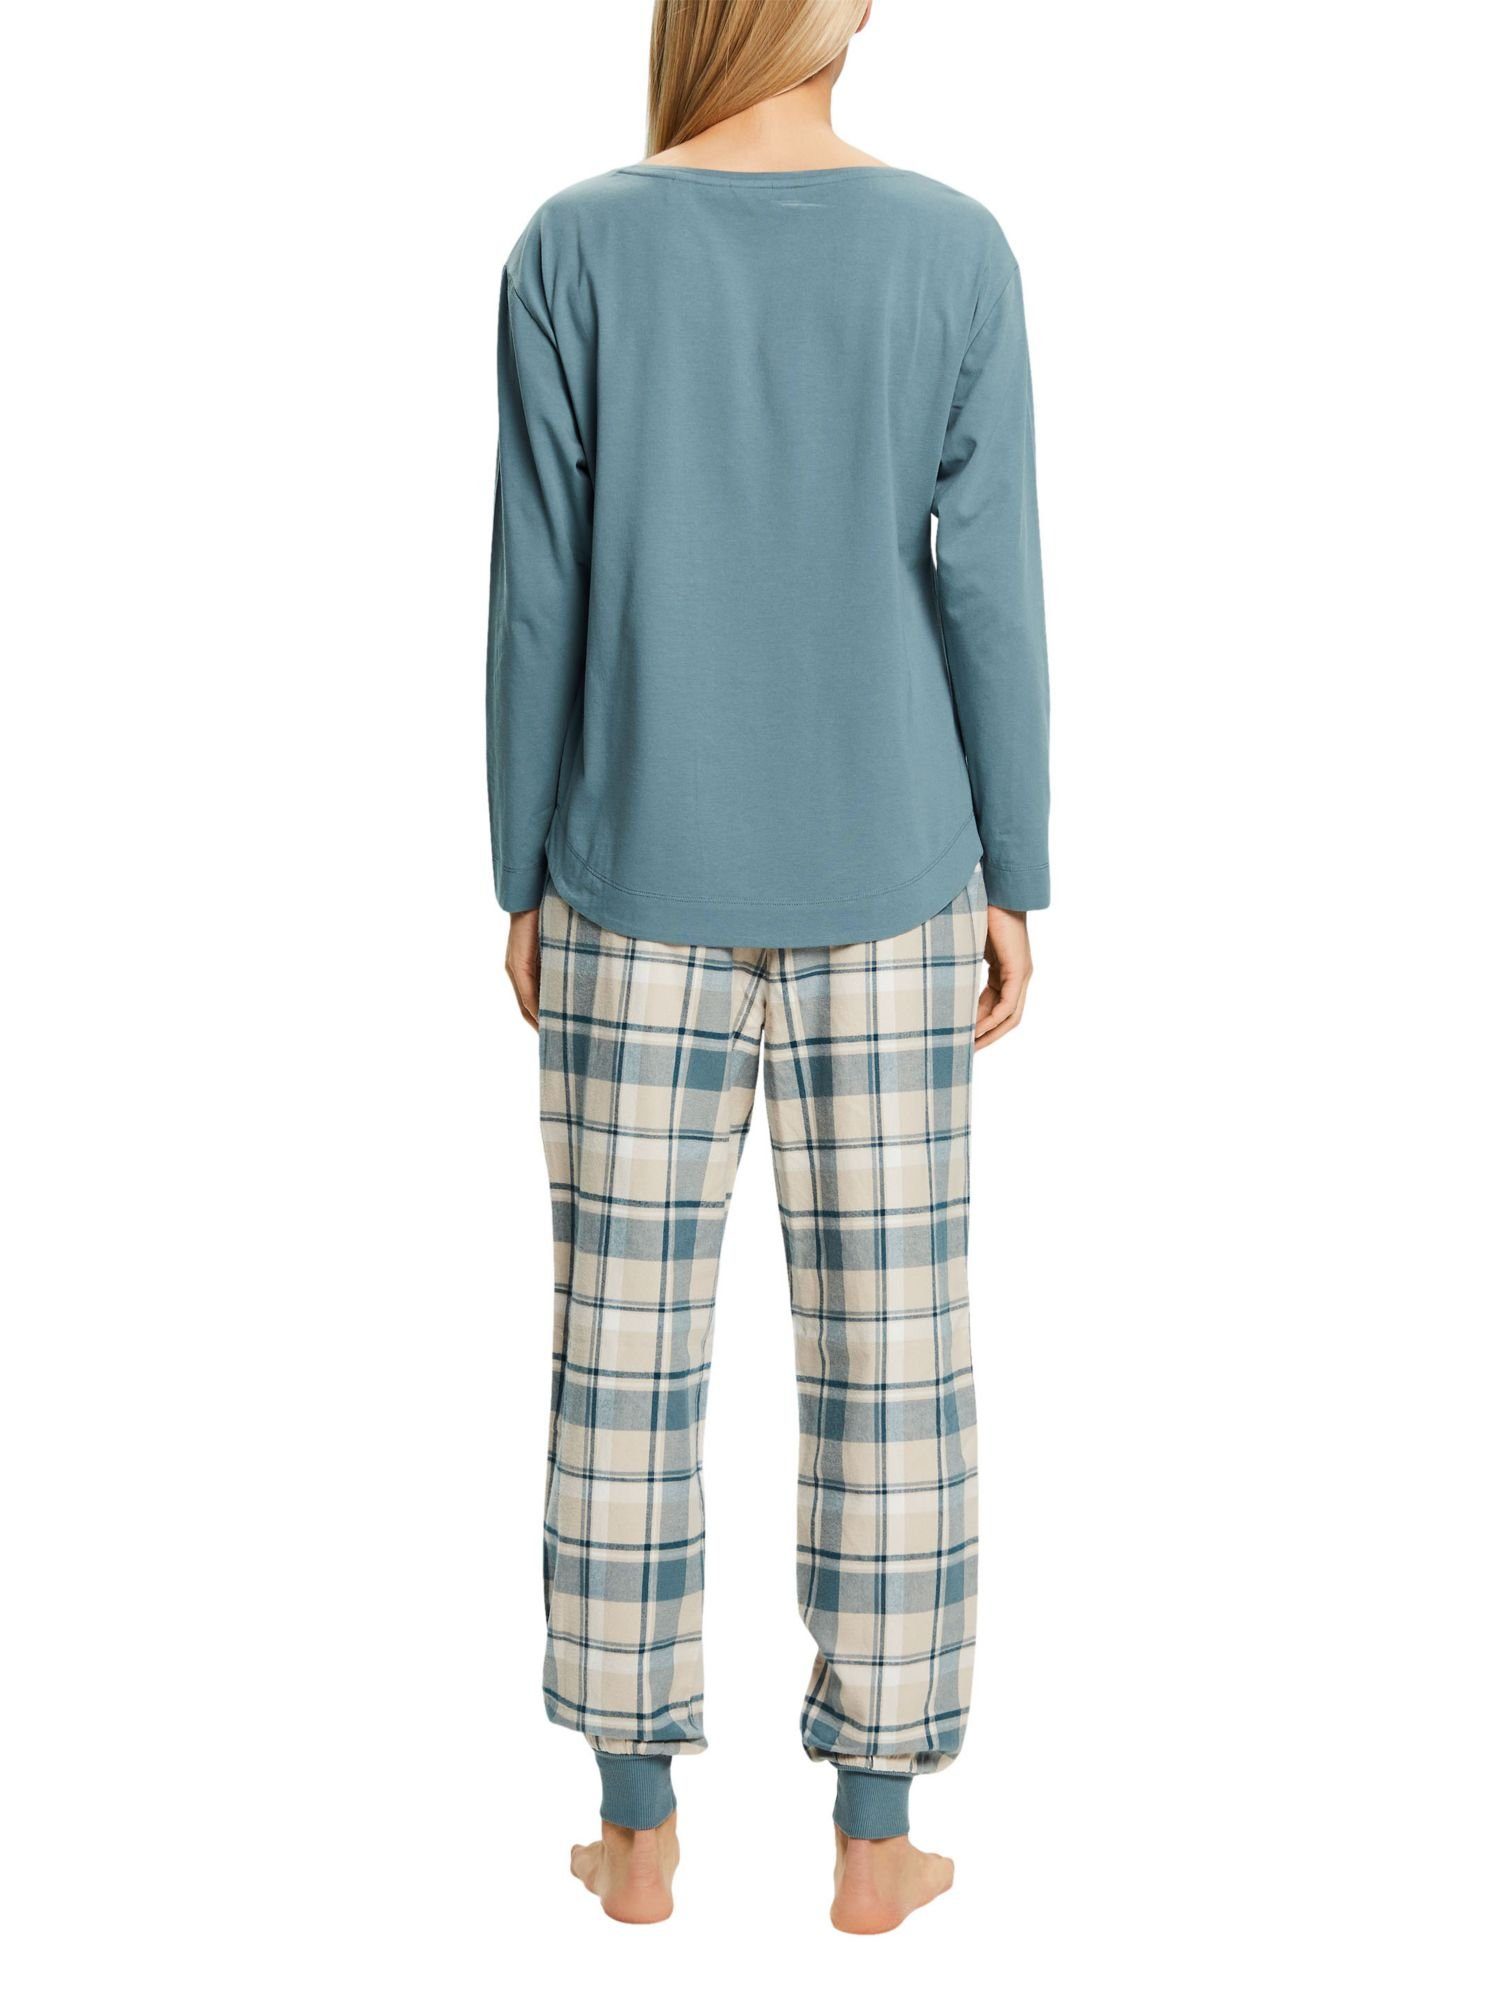 Flanell Pyjama NEW aus TEAL Esprit kariertem Pyjama-Set BLUE